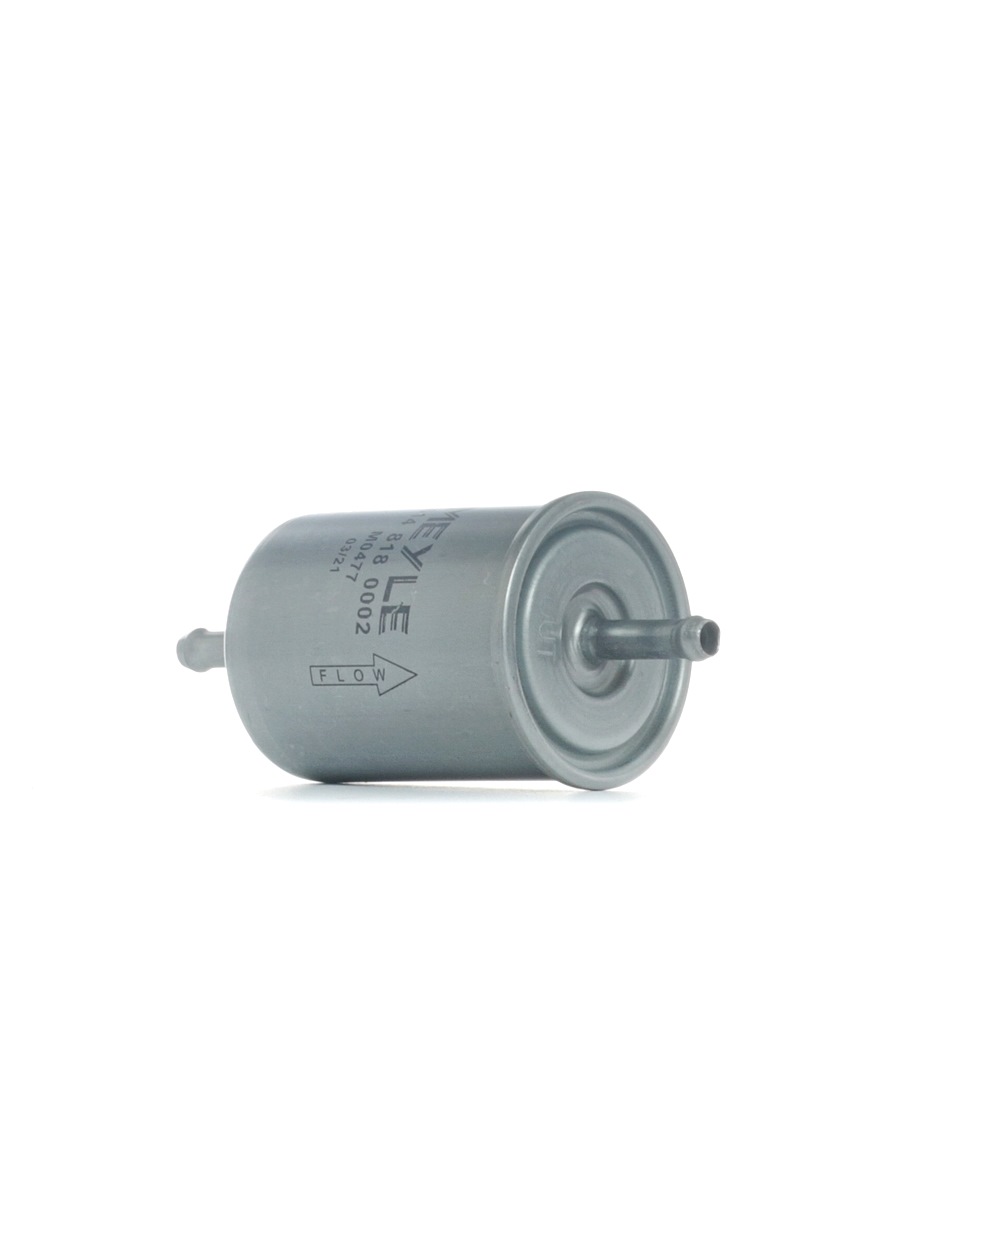 MEYLE 614 818 0002 Fuel filter In-Line Filter, ORIGINAL Quality